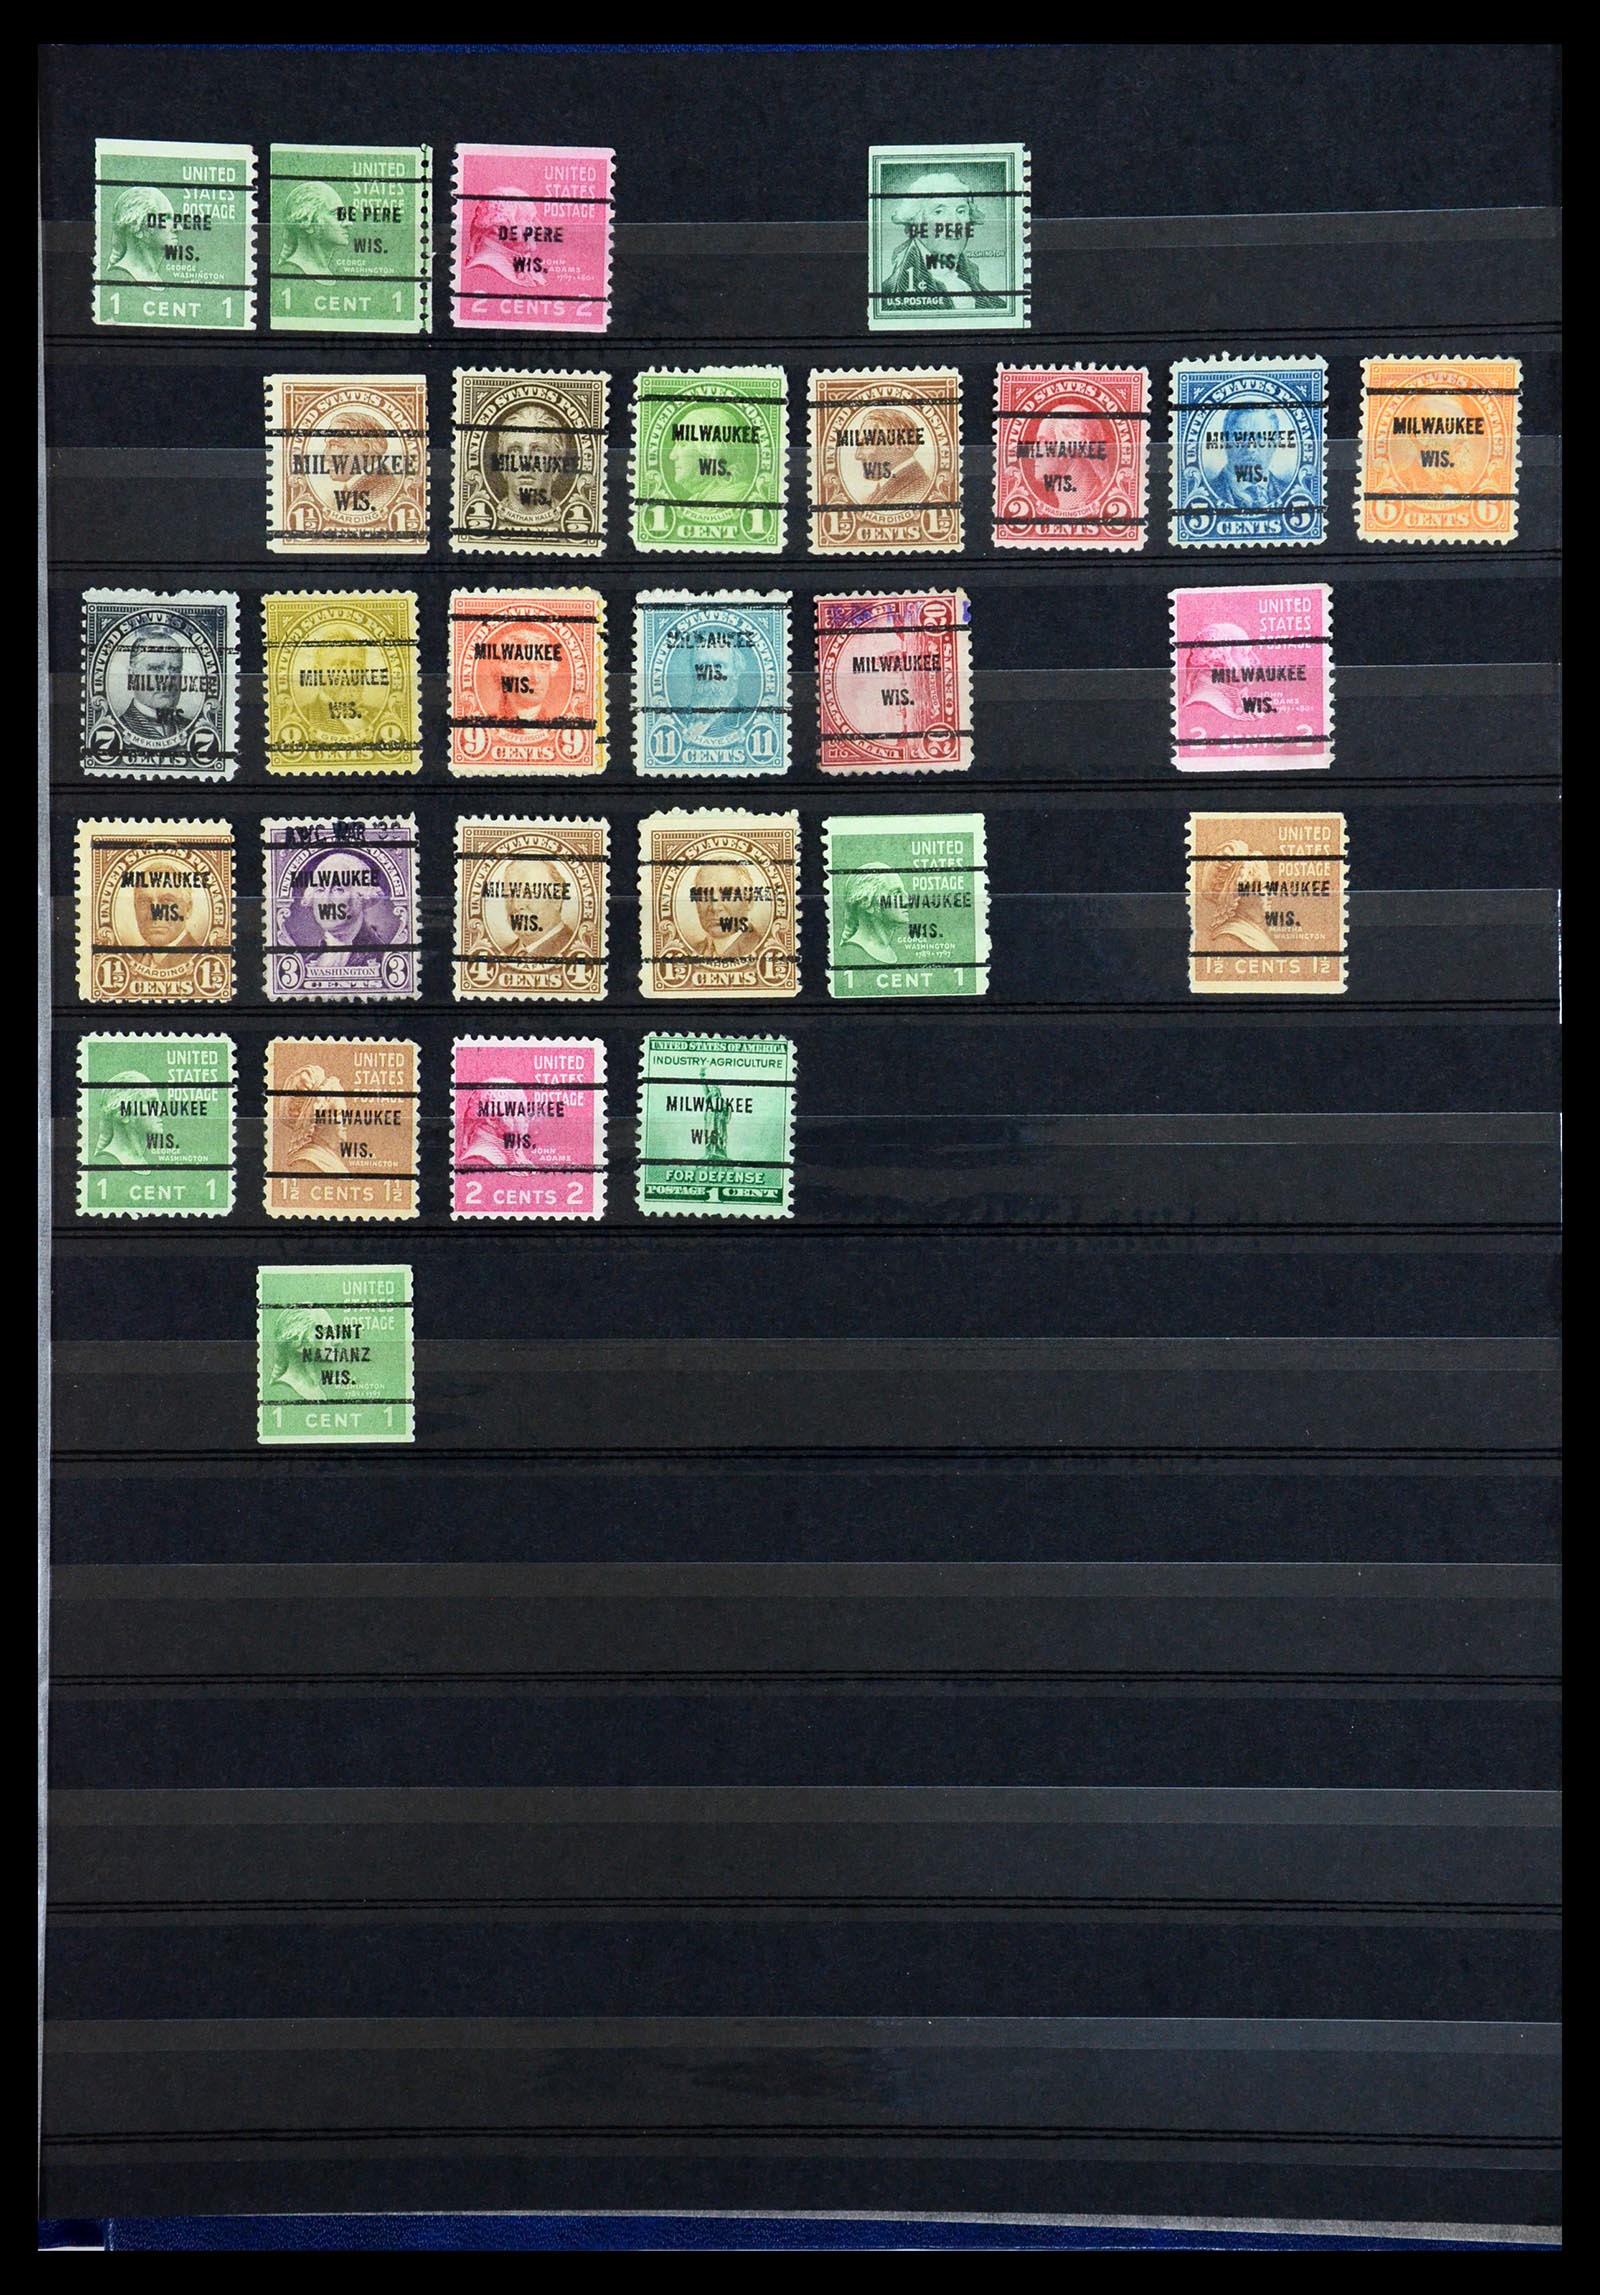 36382 032 - Stamp collection 36382 USA precancels.